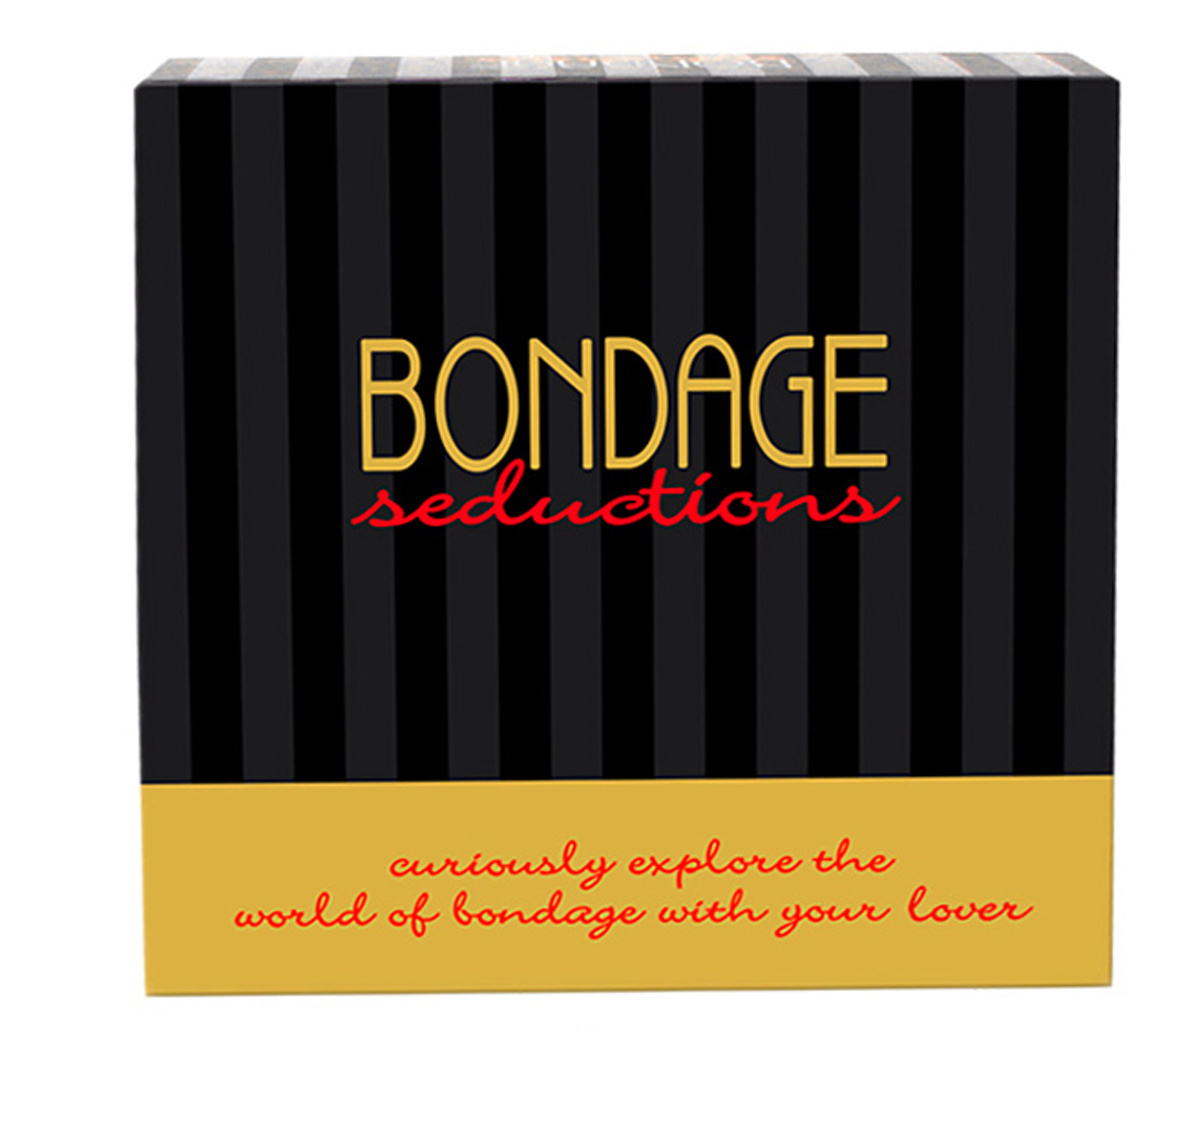 388032965-bondage-seductions1.jpg